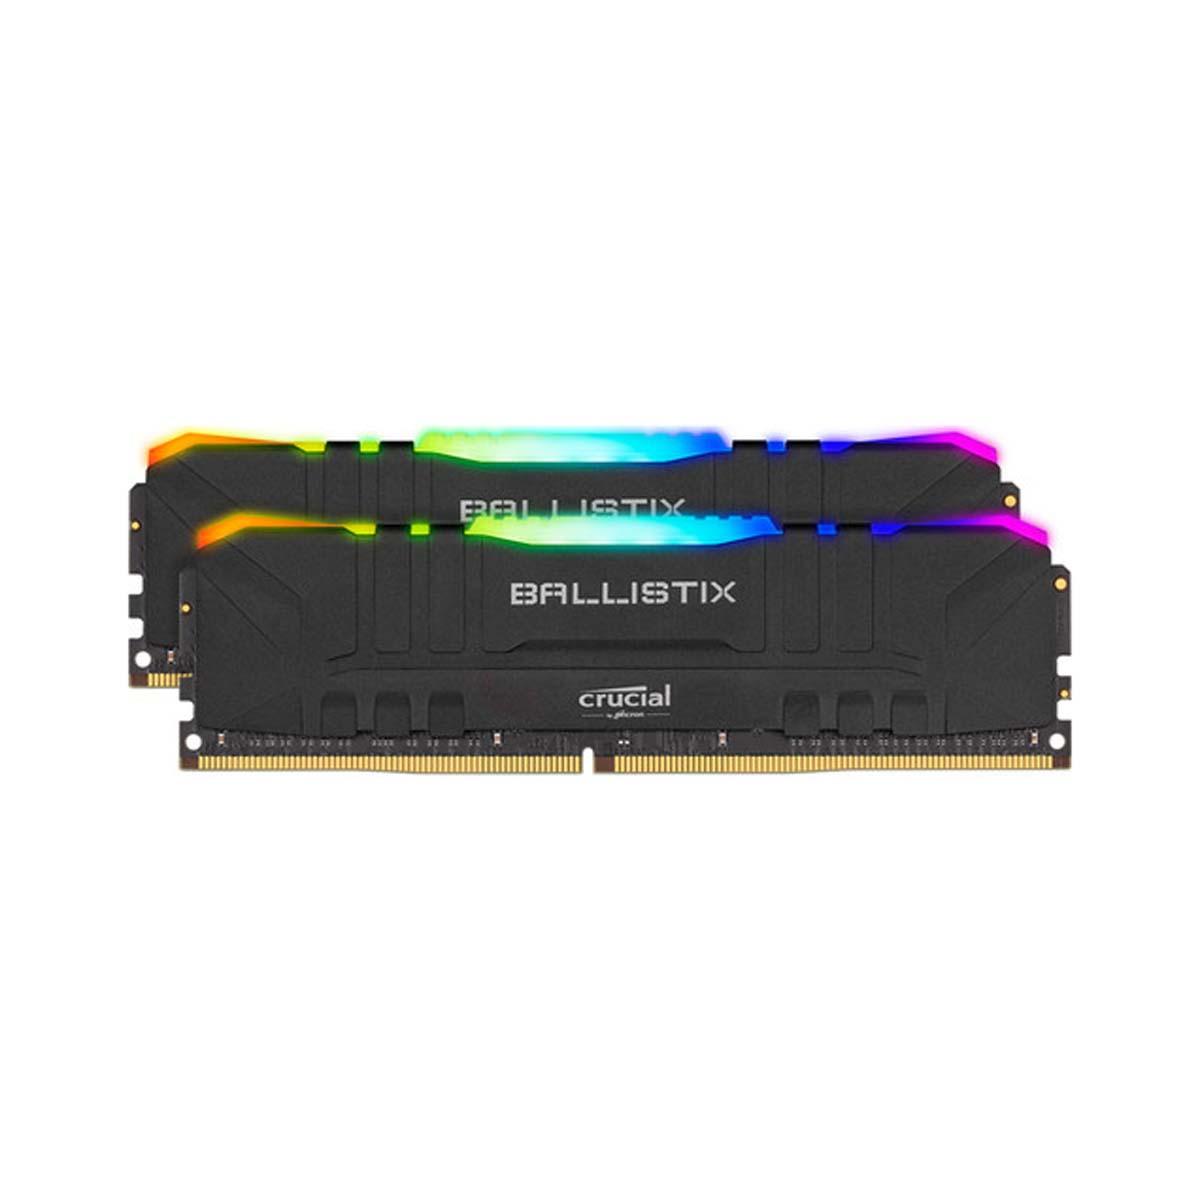 MEMORIA DIMM DDR4 CRUCIAL BALLISTIX (BL2K8G30C15U4BL) RGB 16GB KIT (2X8GB) 3000MHZ, BLACK HS, CL16 - CRUCIAL